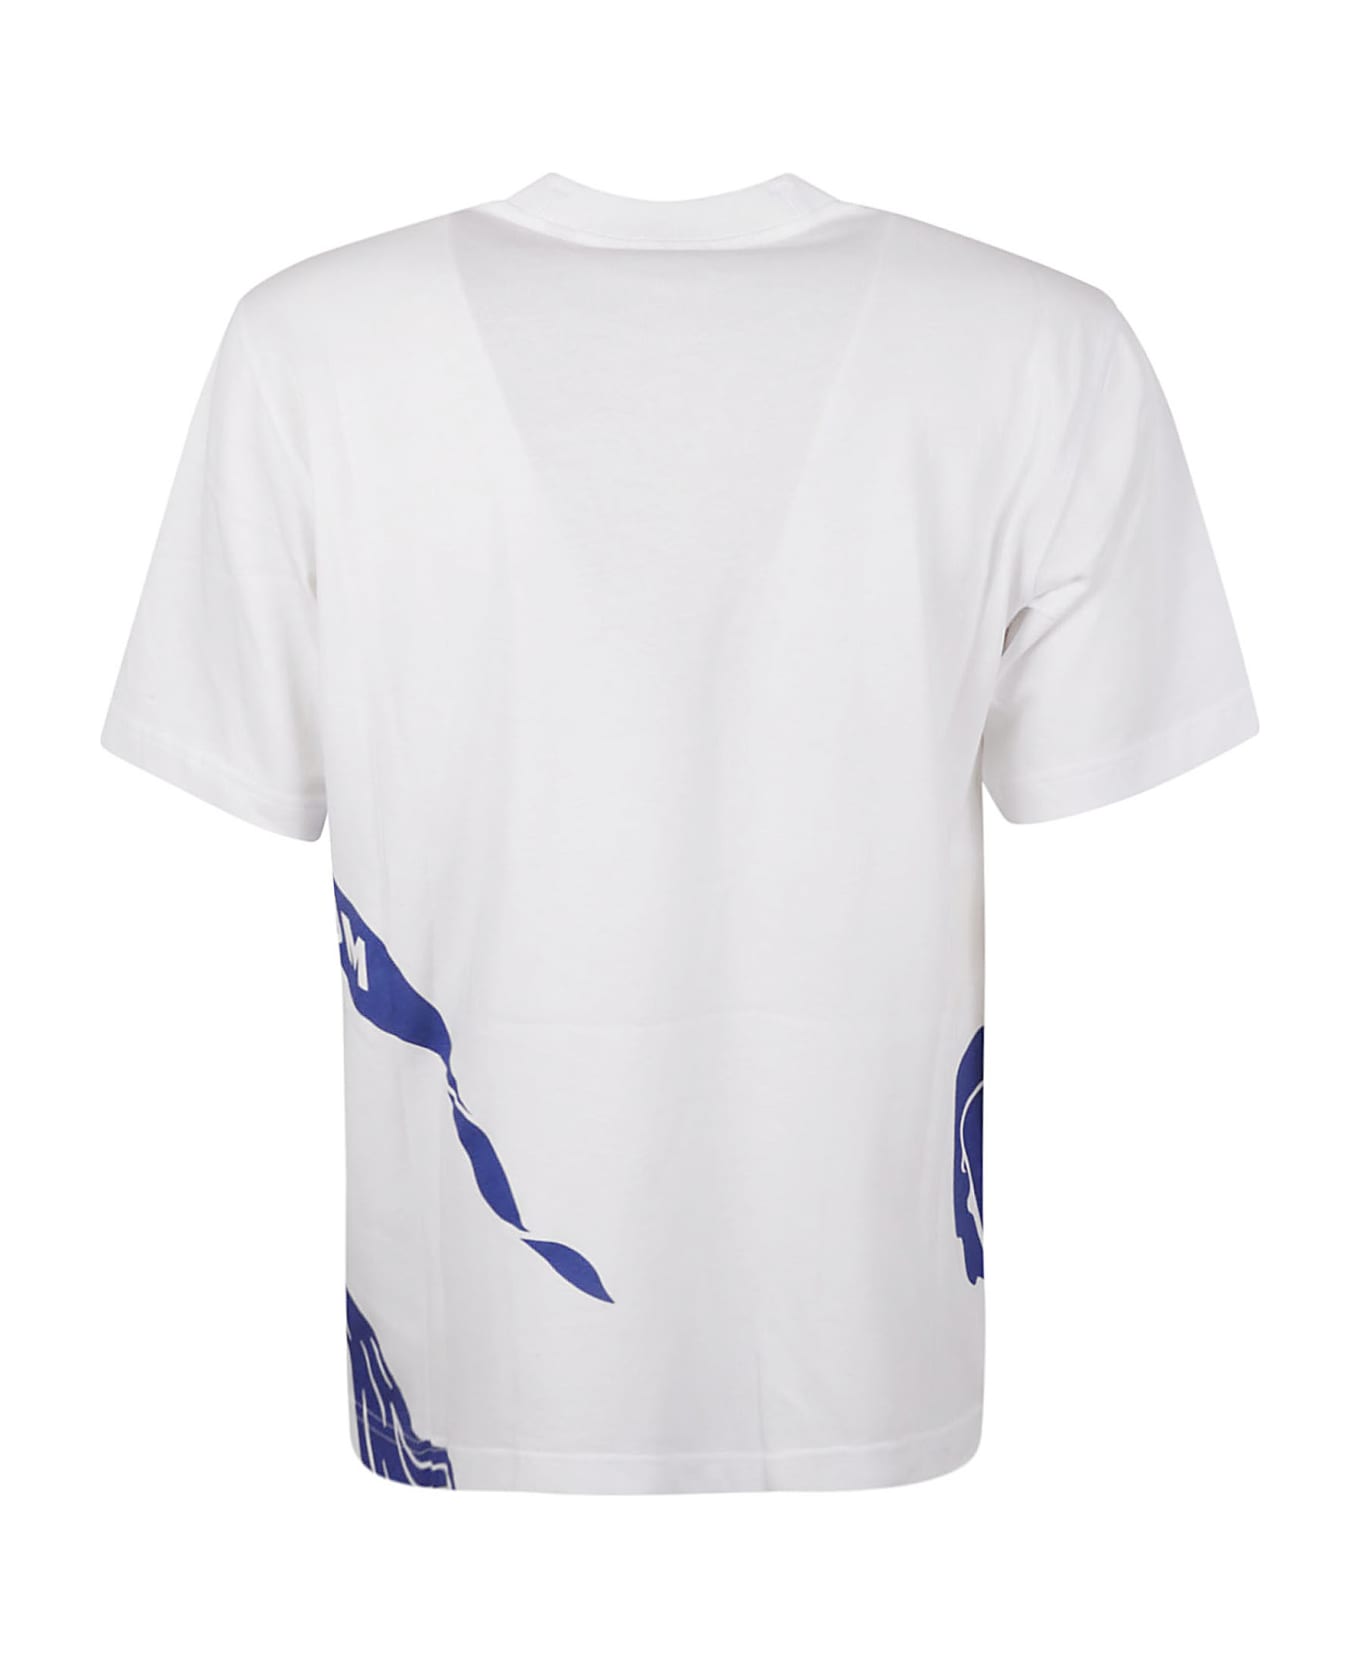 Burberry Printed T-shirt - Knight ip pattern